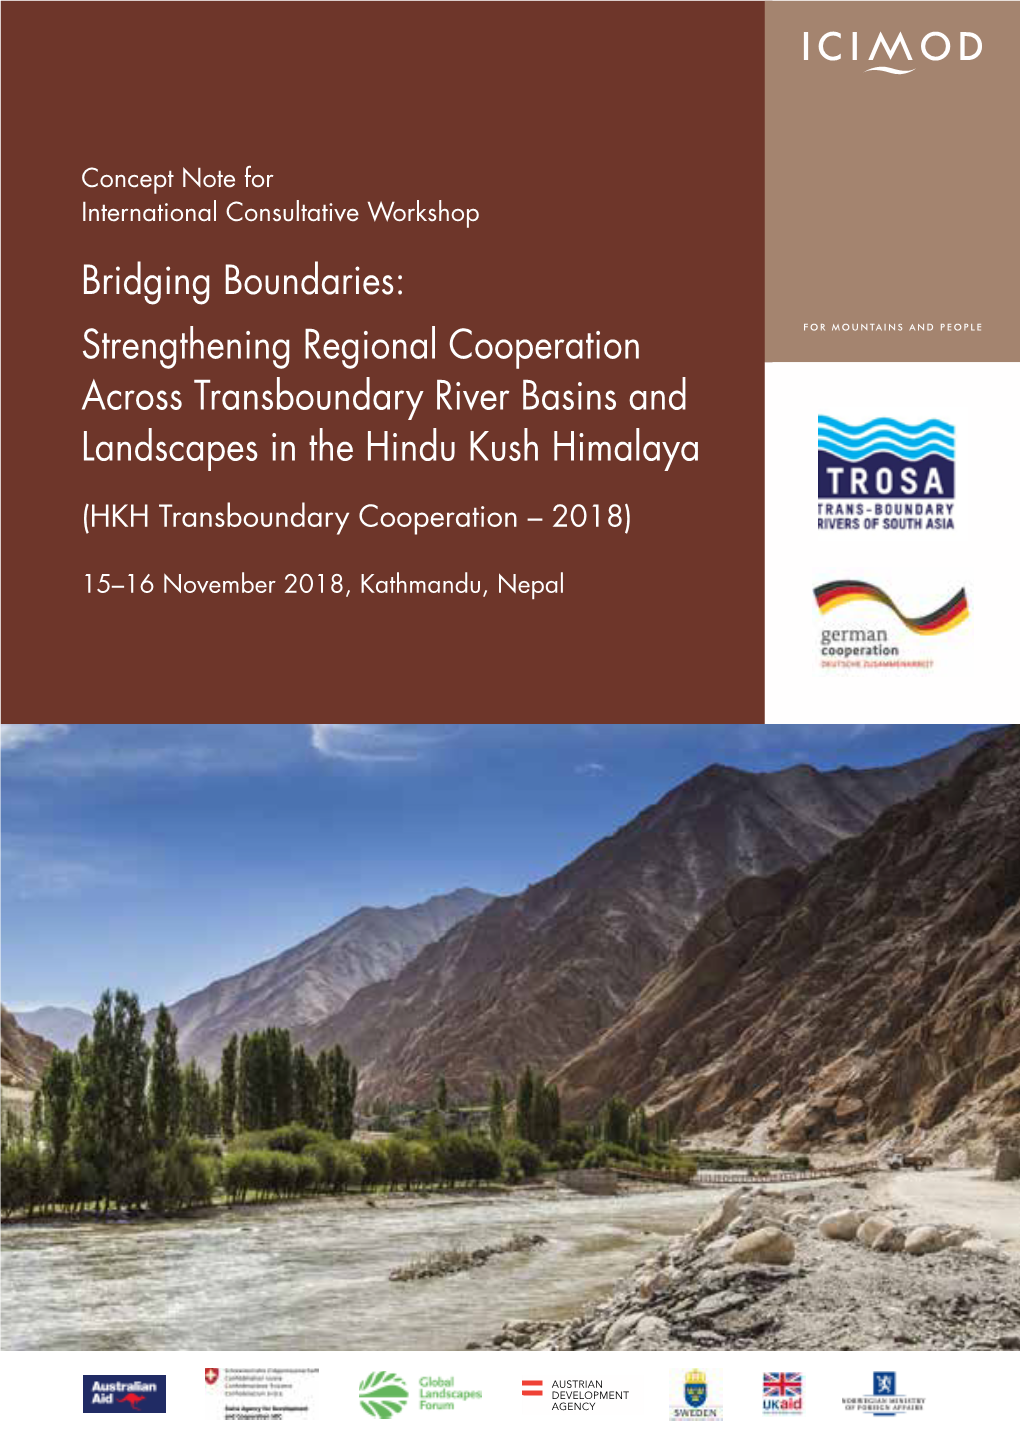 Strengthening Regional Cooperation Across Transboundary River Basins and Landscapes in the Hindu Kush Himalaya